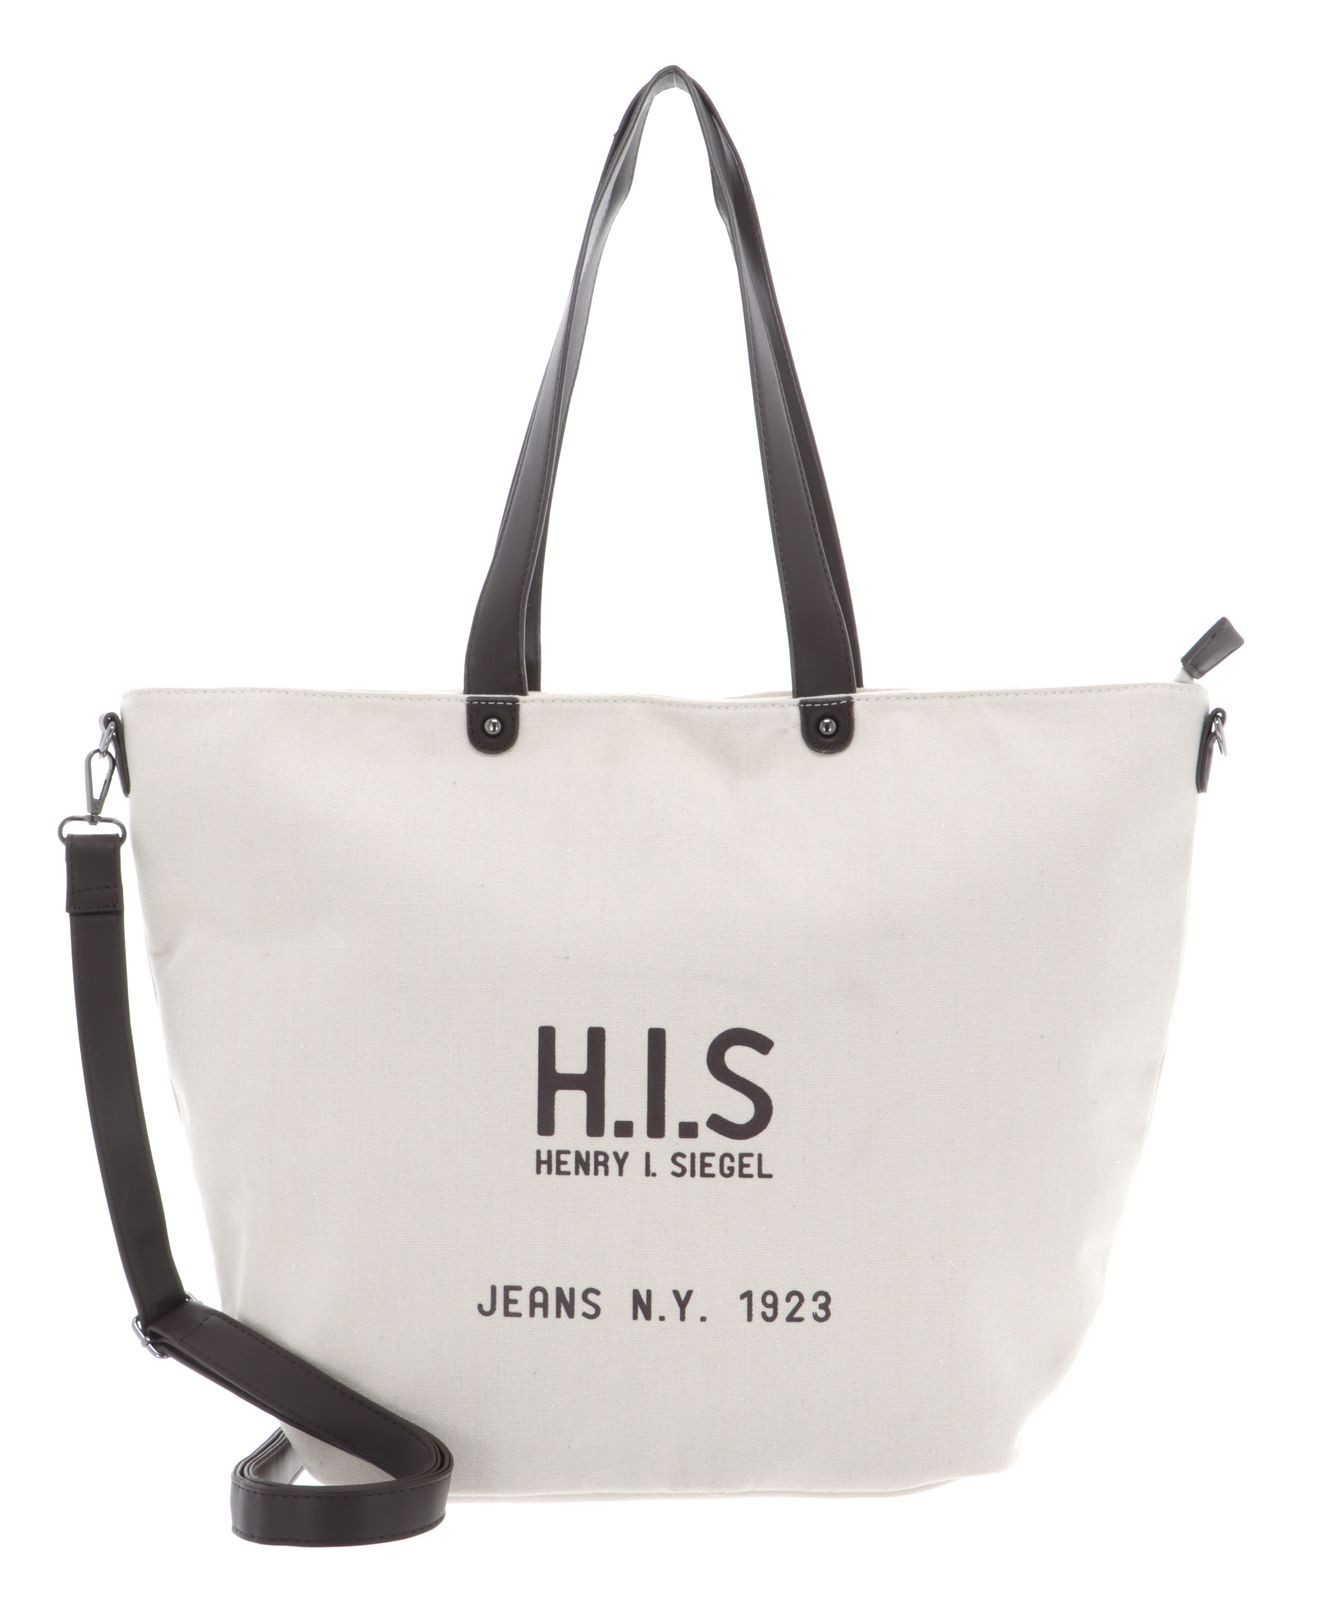 H.I.S Shopper